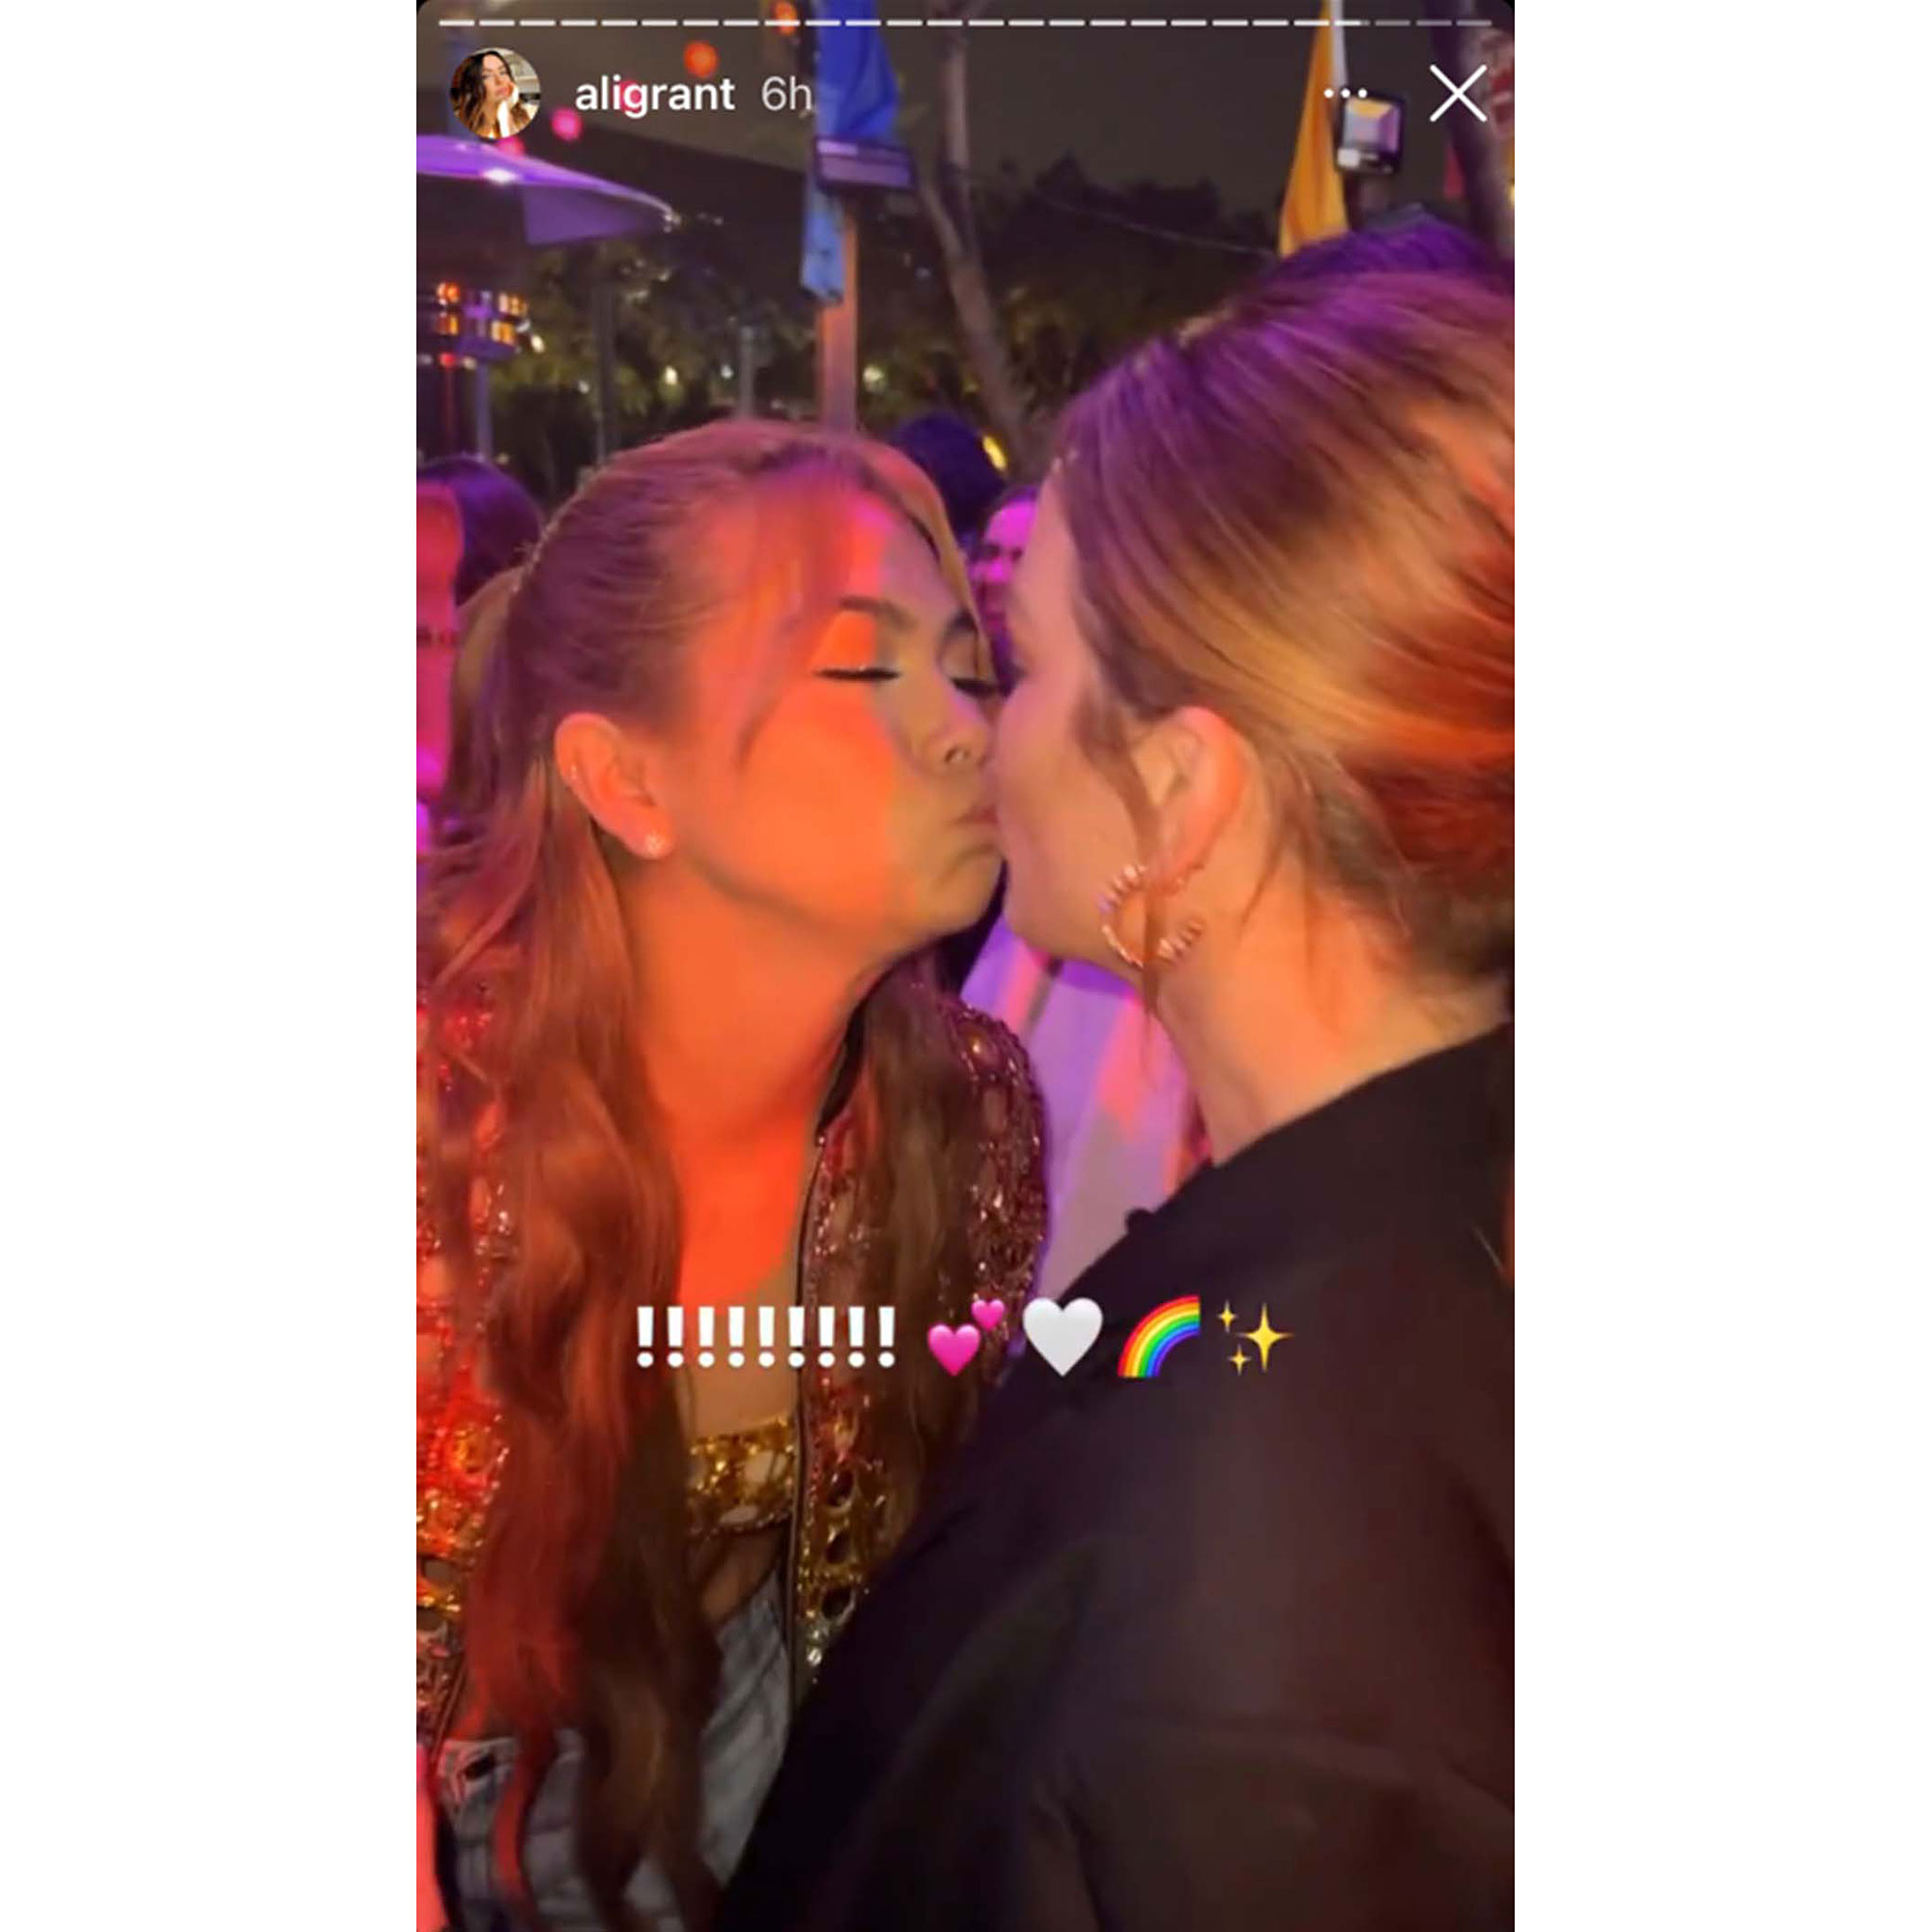 Lesbian Nurse Kiss